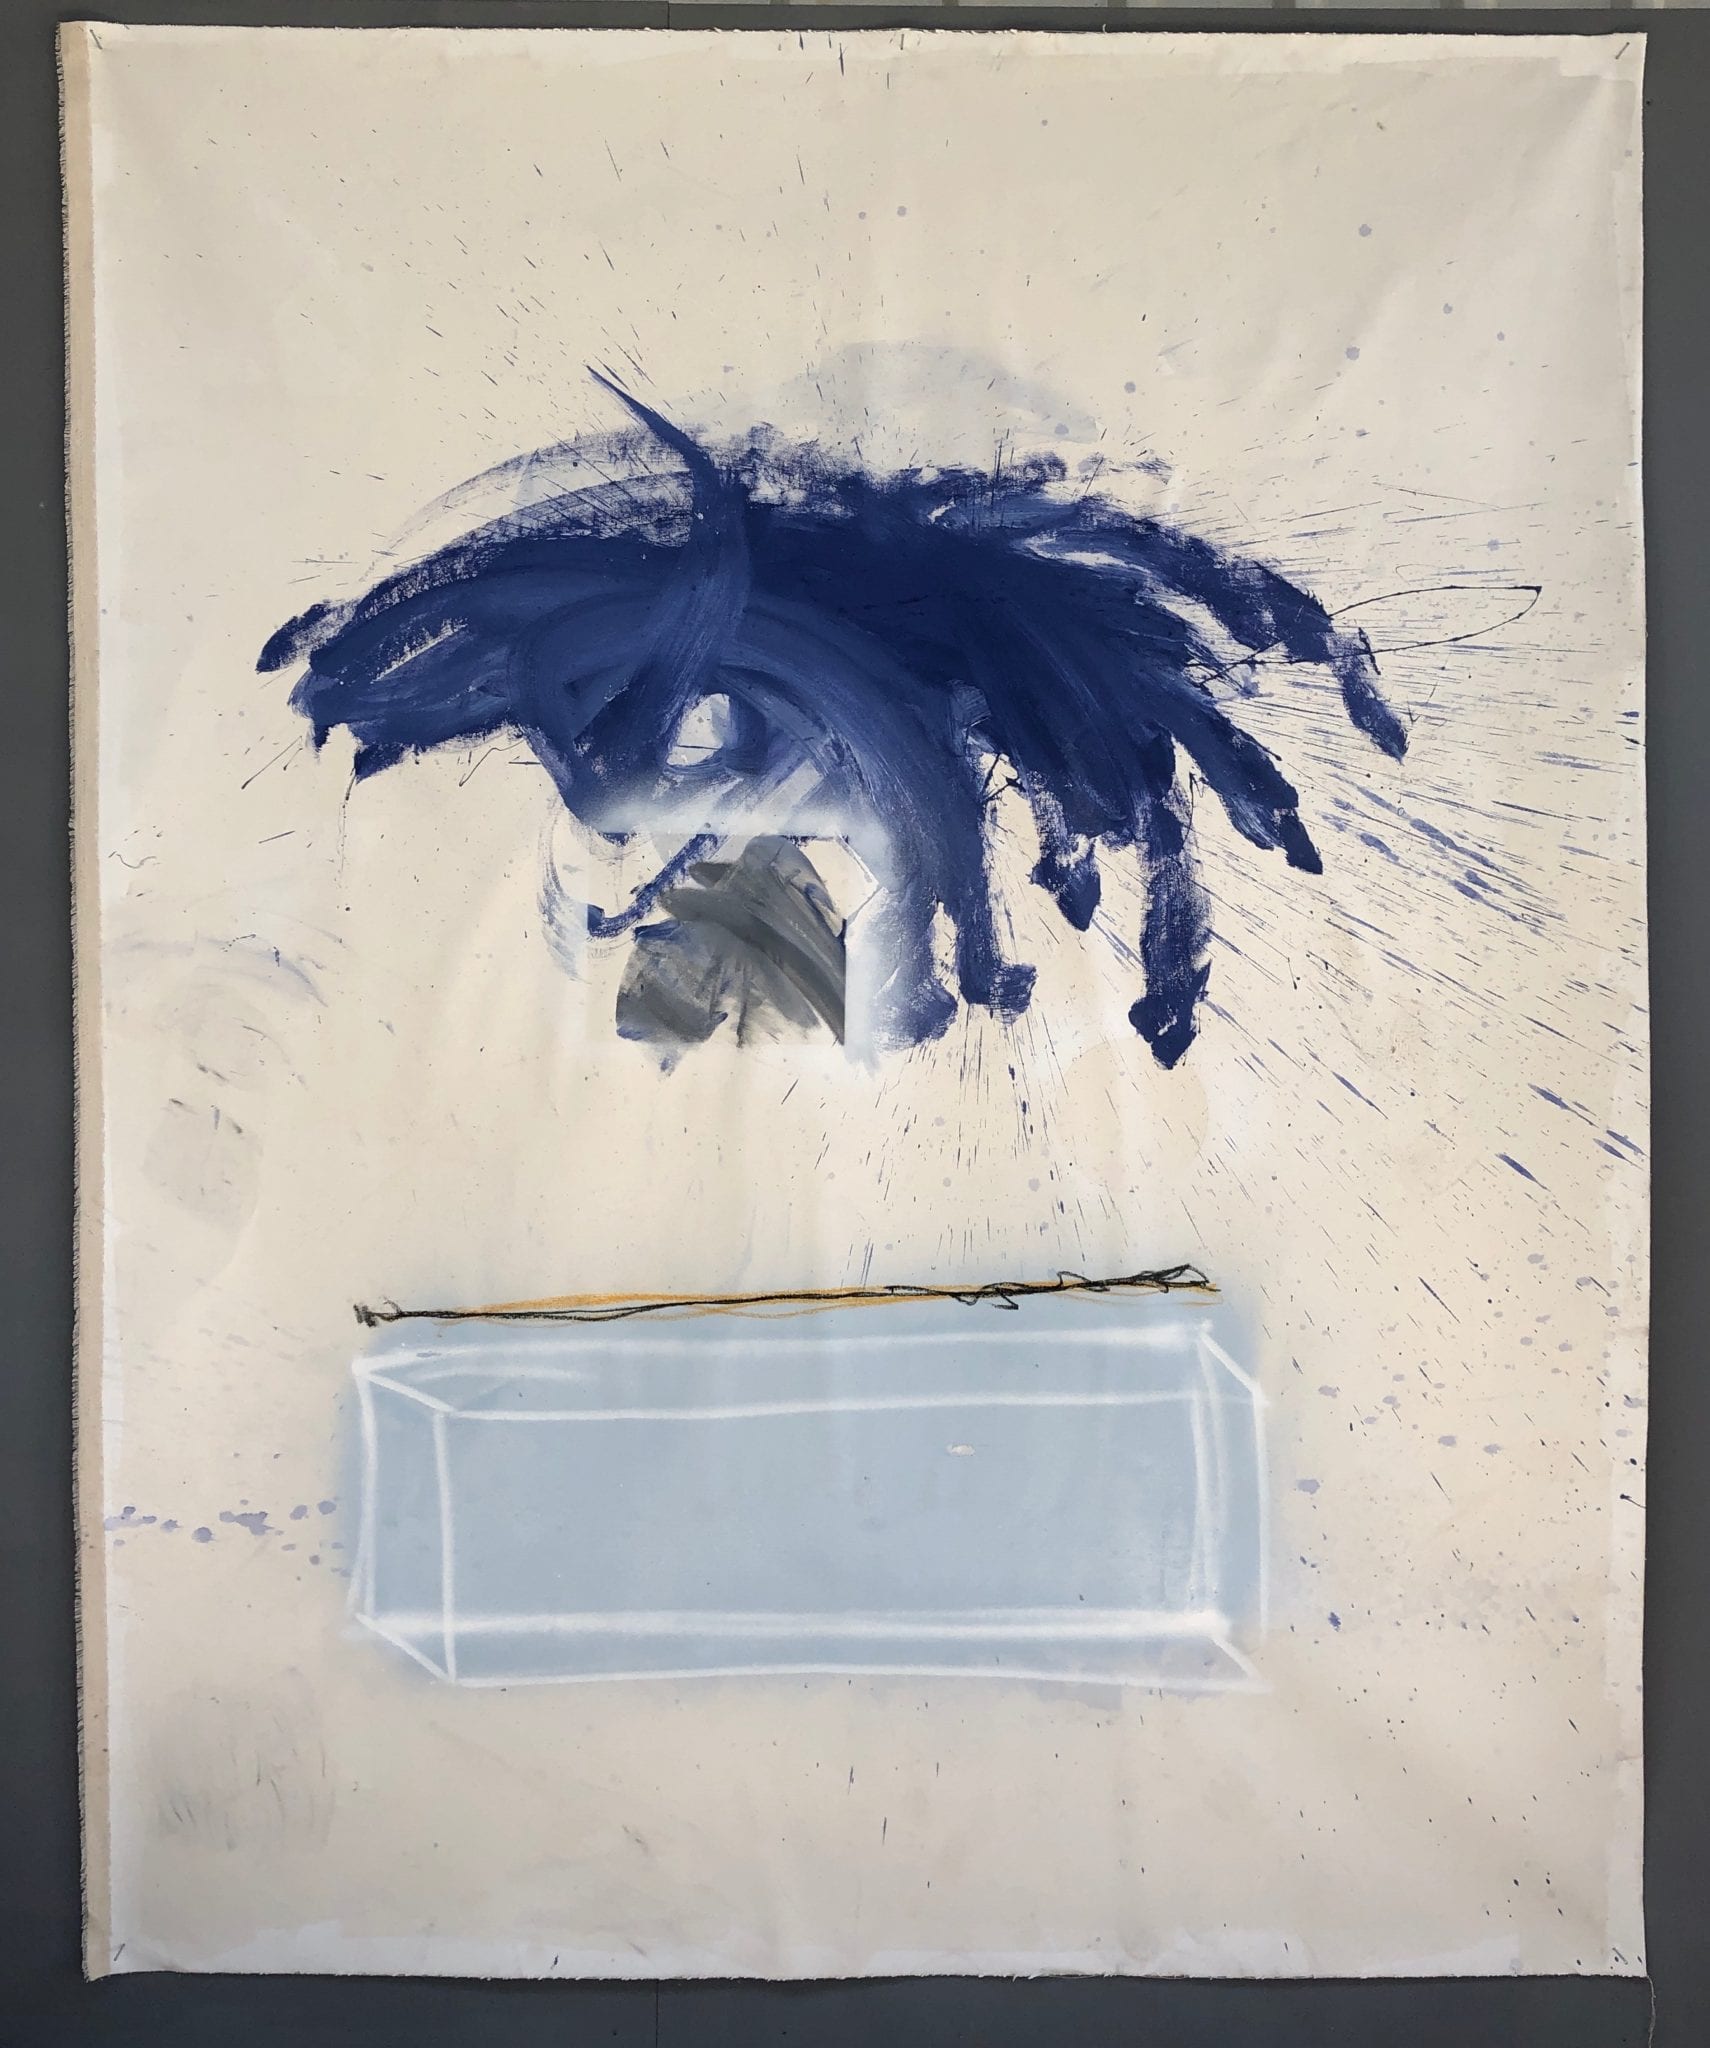 Jeremy Kasper, The In Between, 2019, Aerosol, enamel, arcylic, pastel, 220 x 190cm, Collection of the artist.